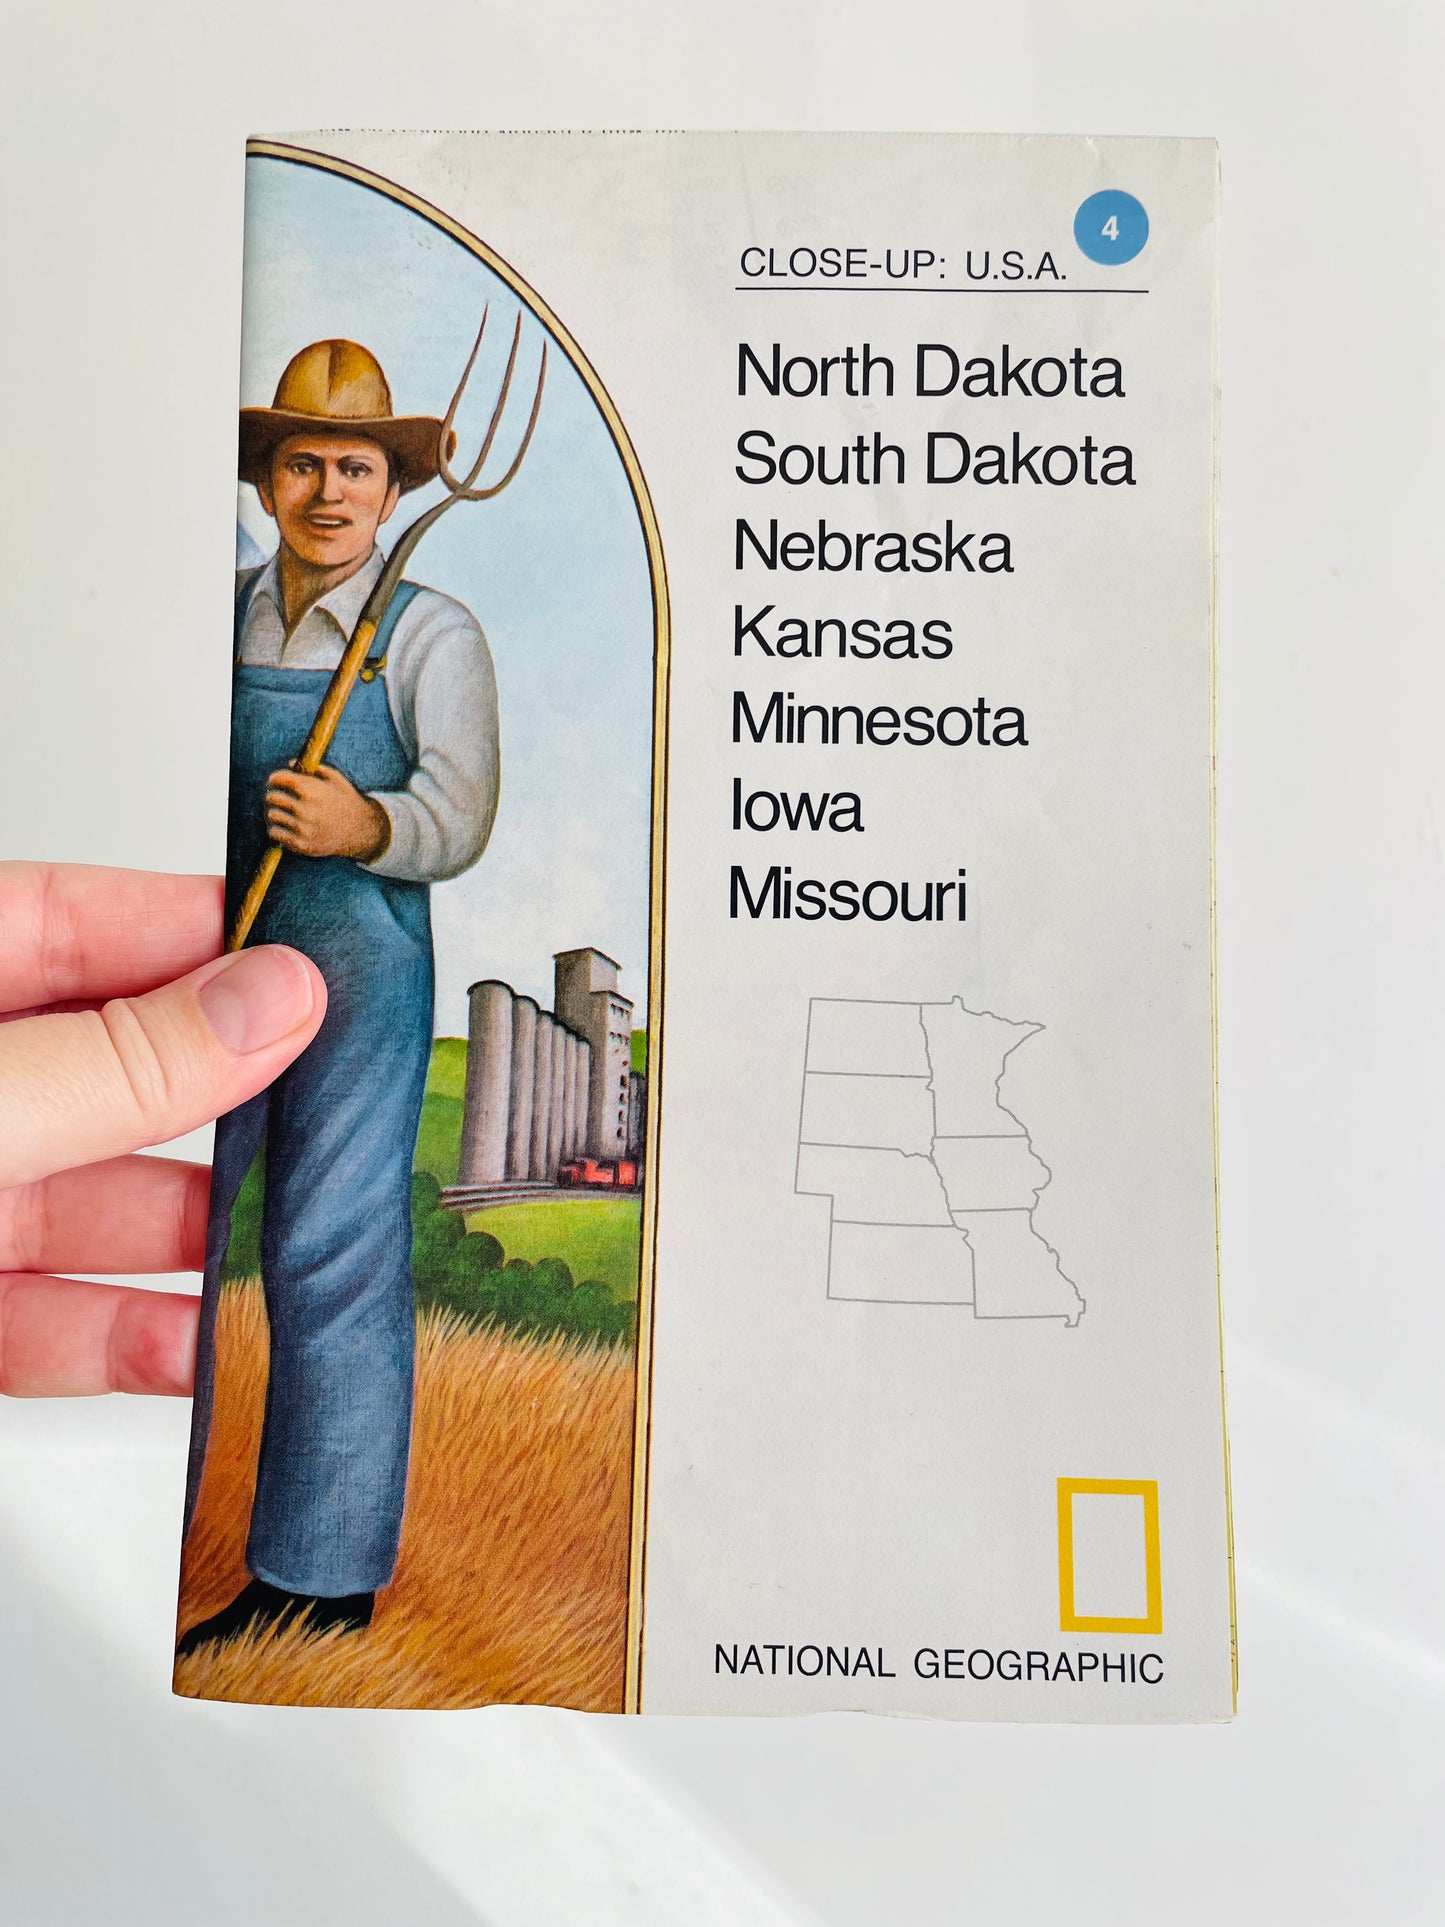 1978 National Geographic Close-Up USA Map - North Dakota, South Dakota, Nebraska, Kansas, Minnesota, Iowa, Missouri